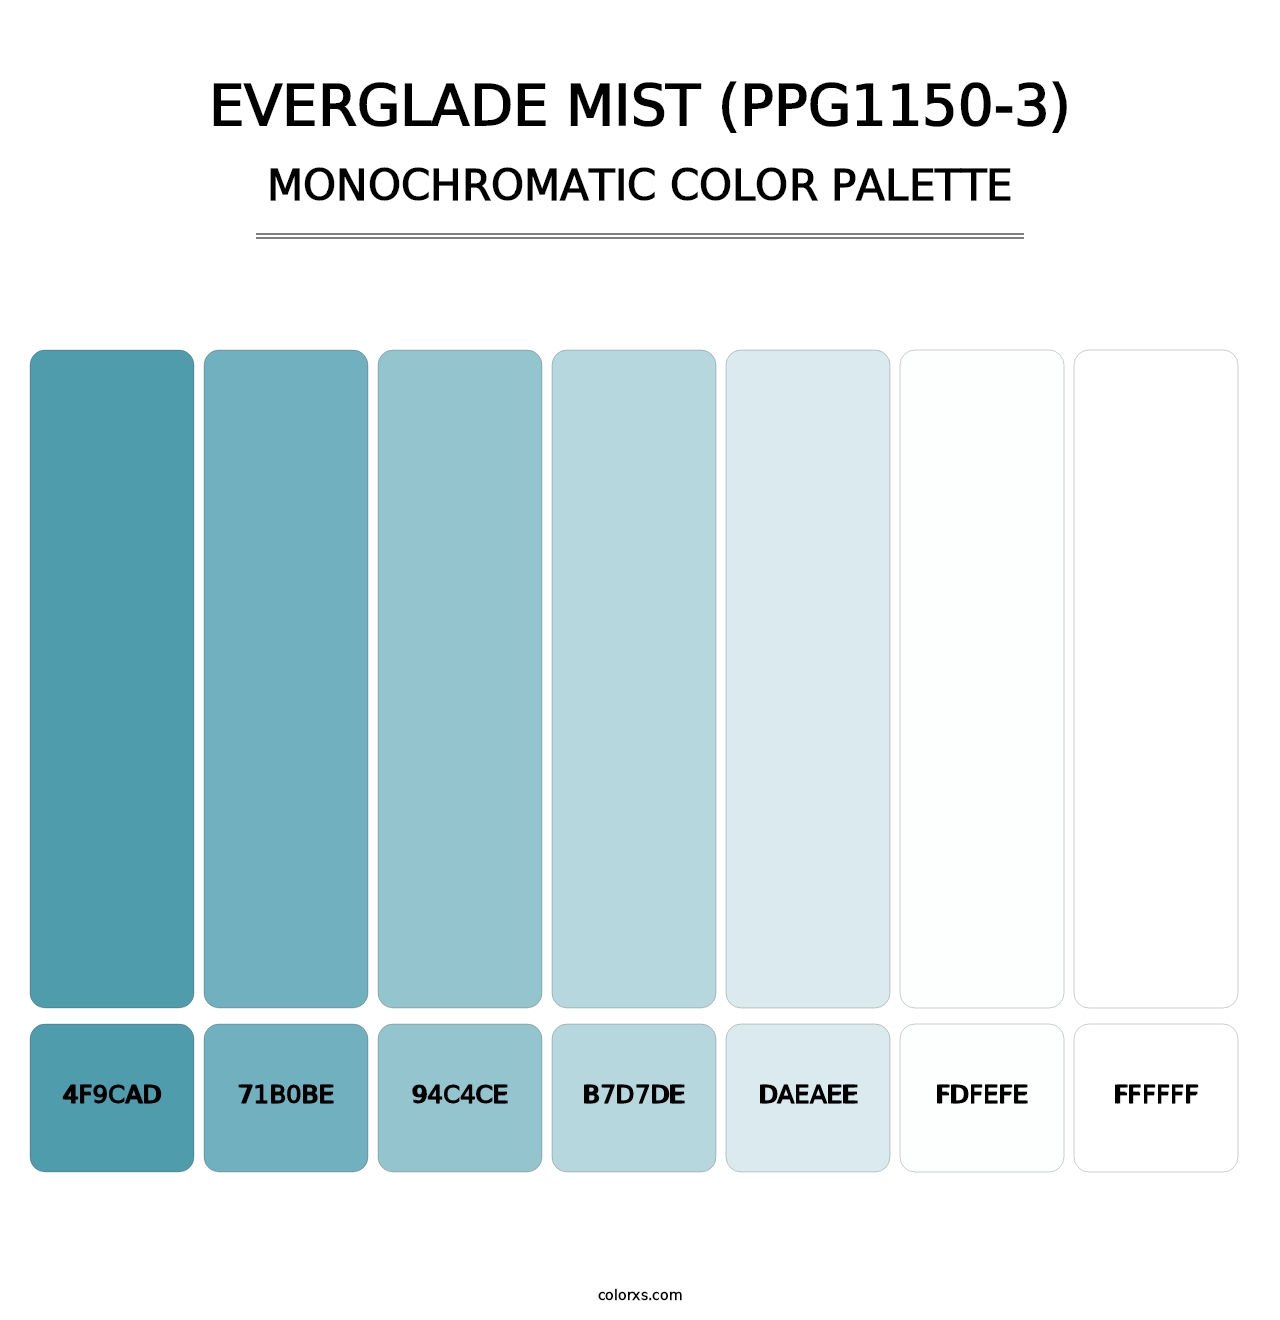 Everglade Mist (PPG1150-3) - Monochromatic Color Palette